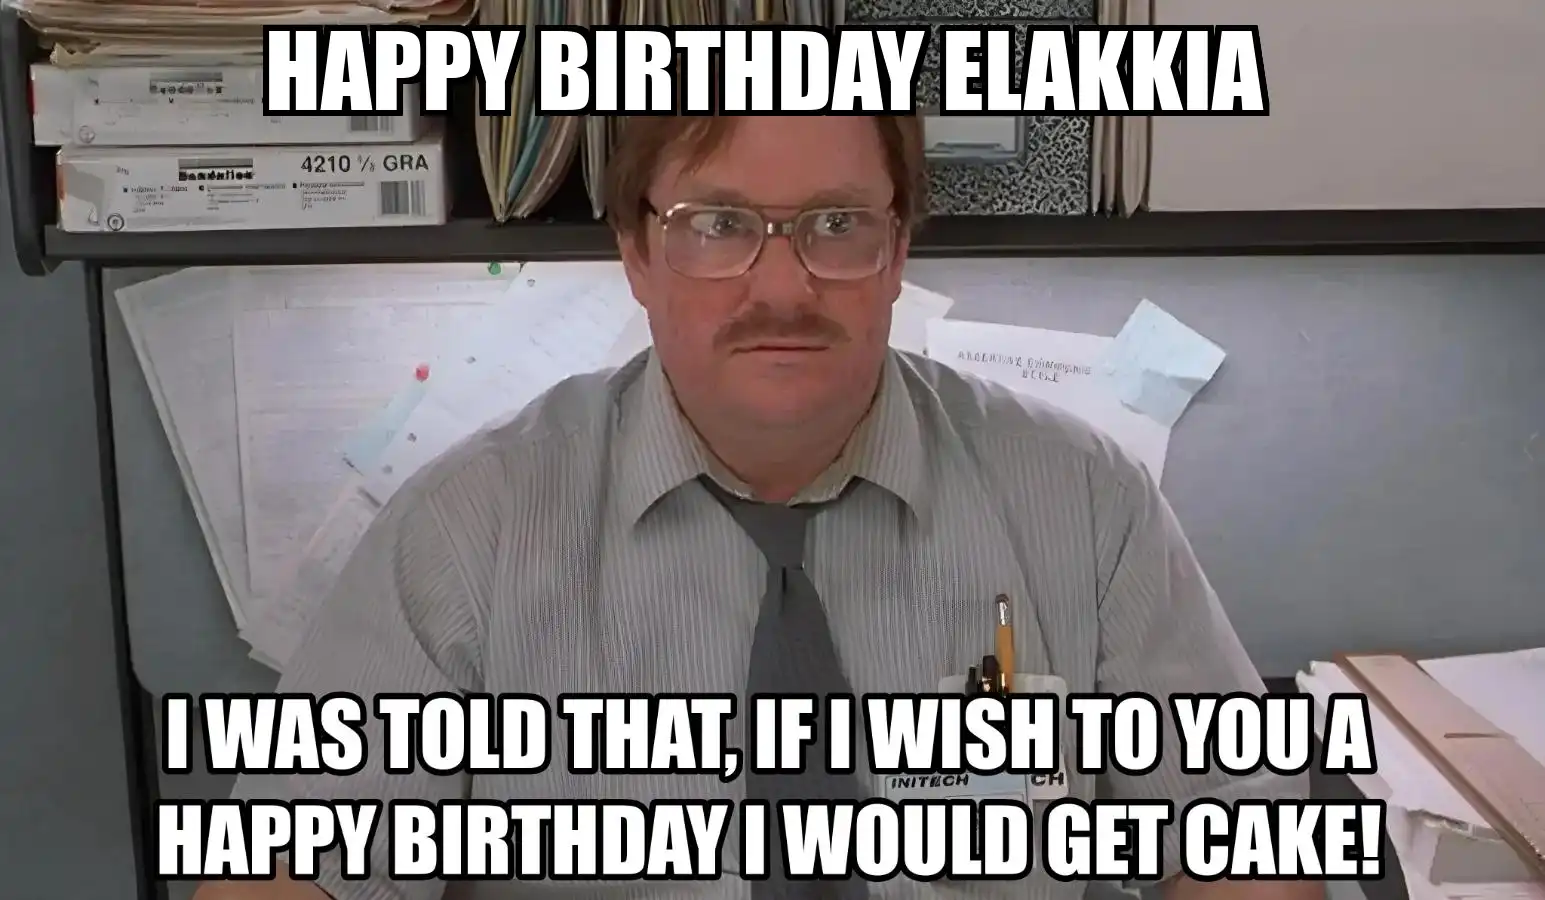 Happy Birthday Elakkia I Would Get A Cake Meme